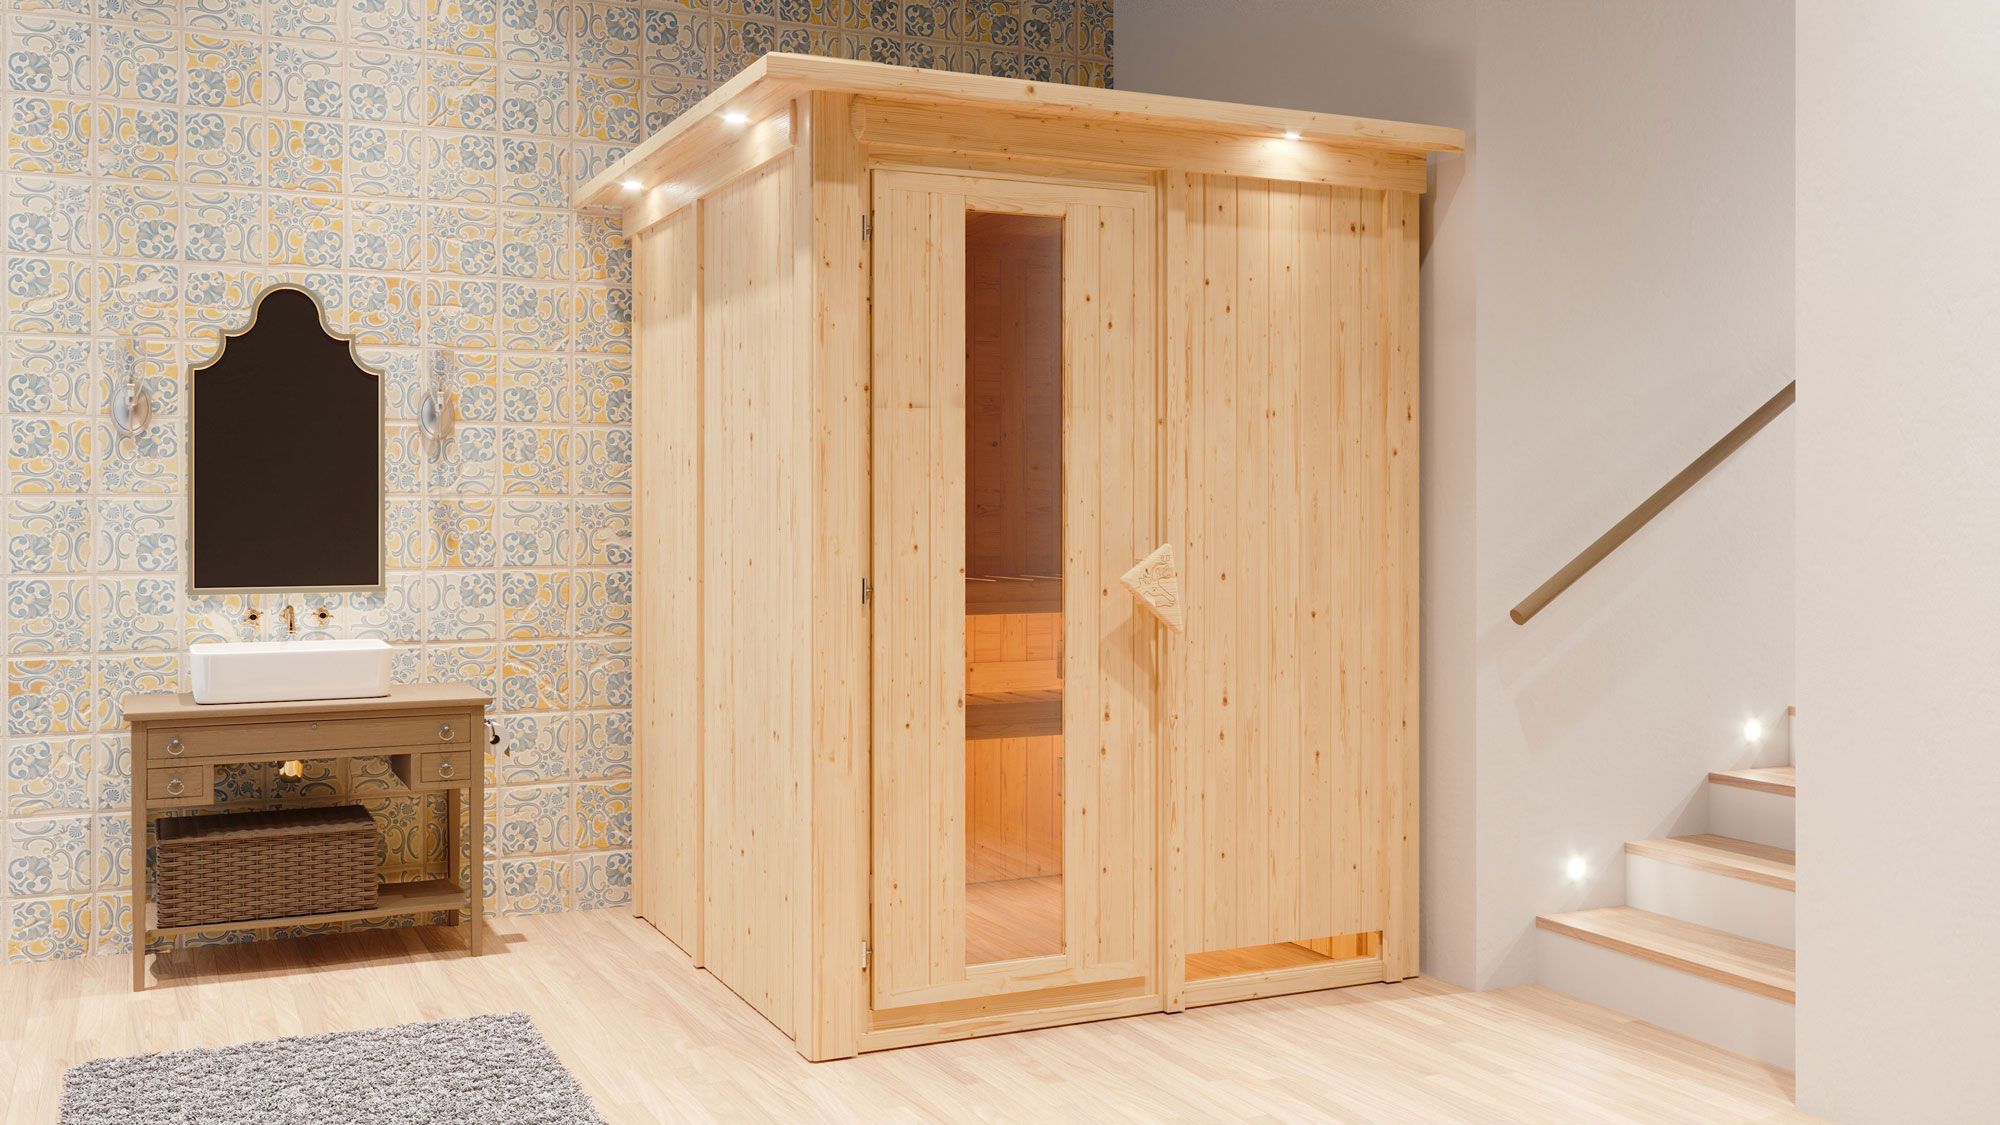 SET-sauna "Niilo" met energiebesparende deur en rand - kleur: naturel, BIO 9 kW kachel - 165 x 165 x 202 cm (B x D x H)